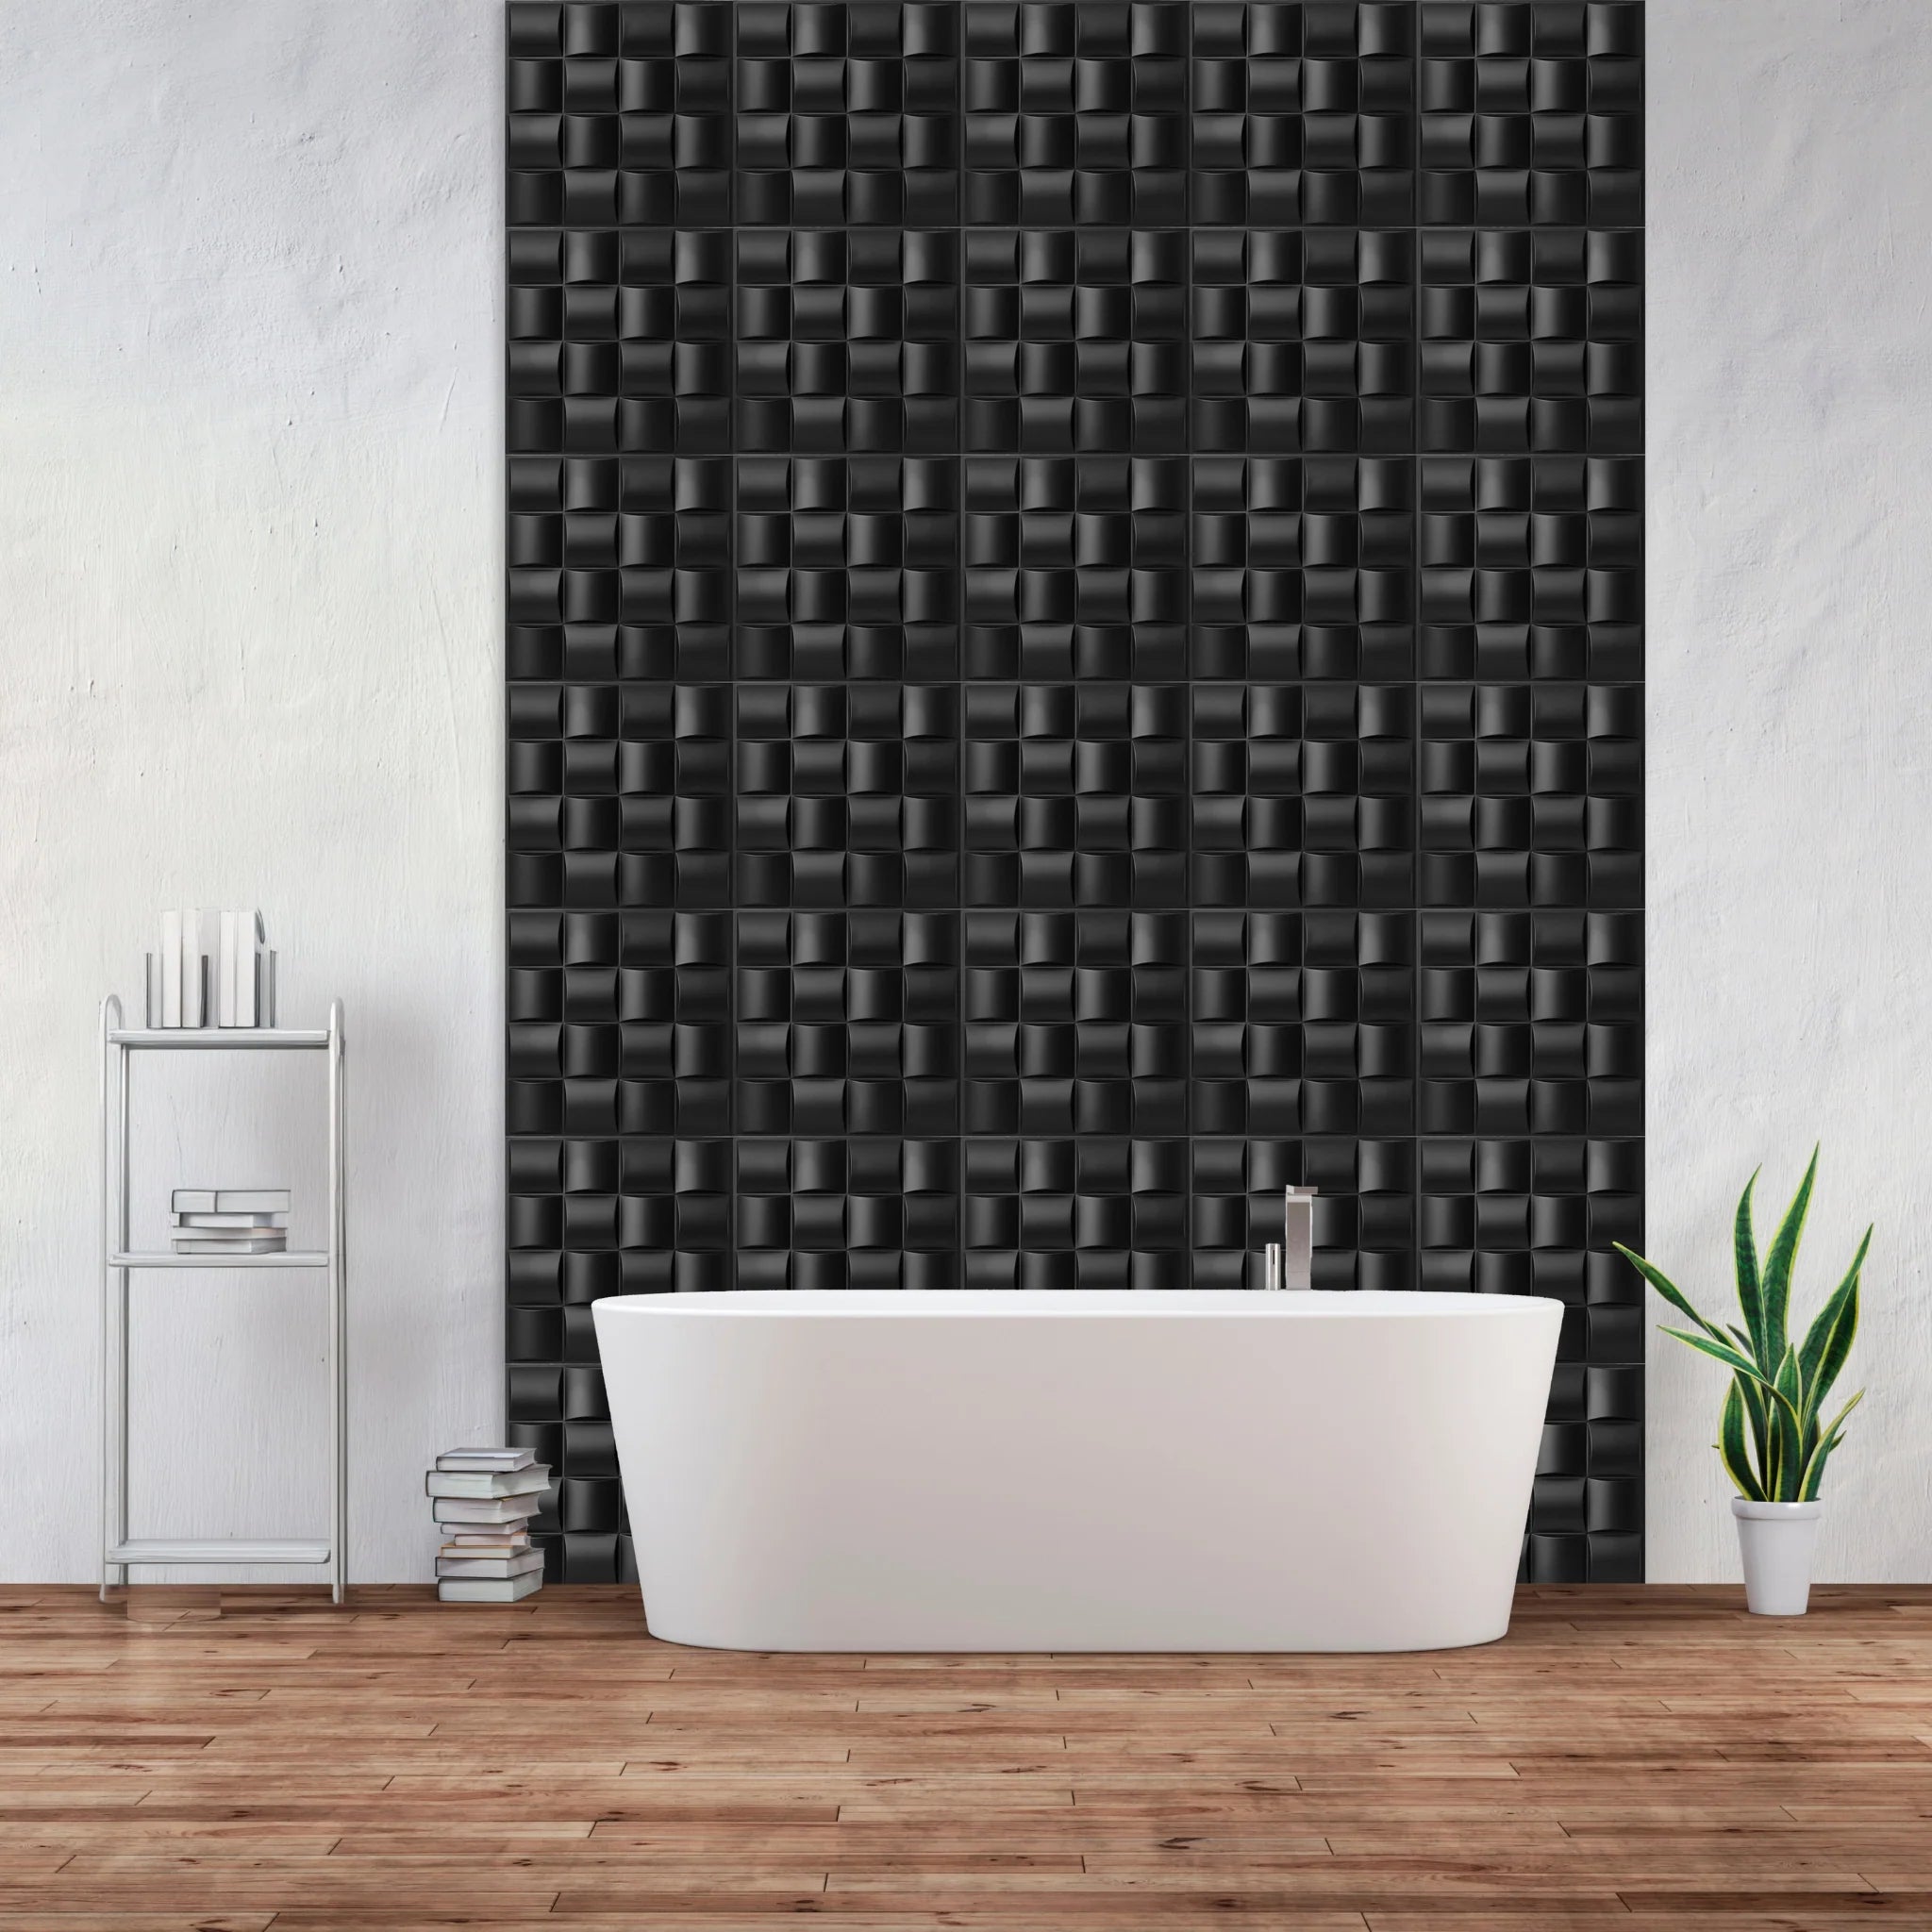 Black 50x50 cm PVC wall panel in minimalist bathroom setting